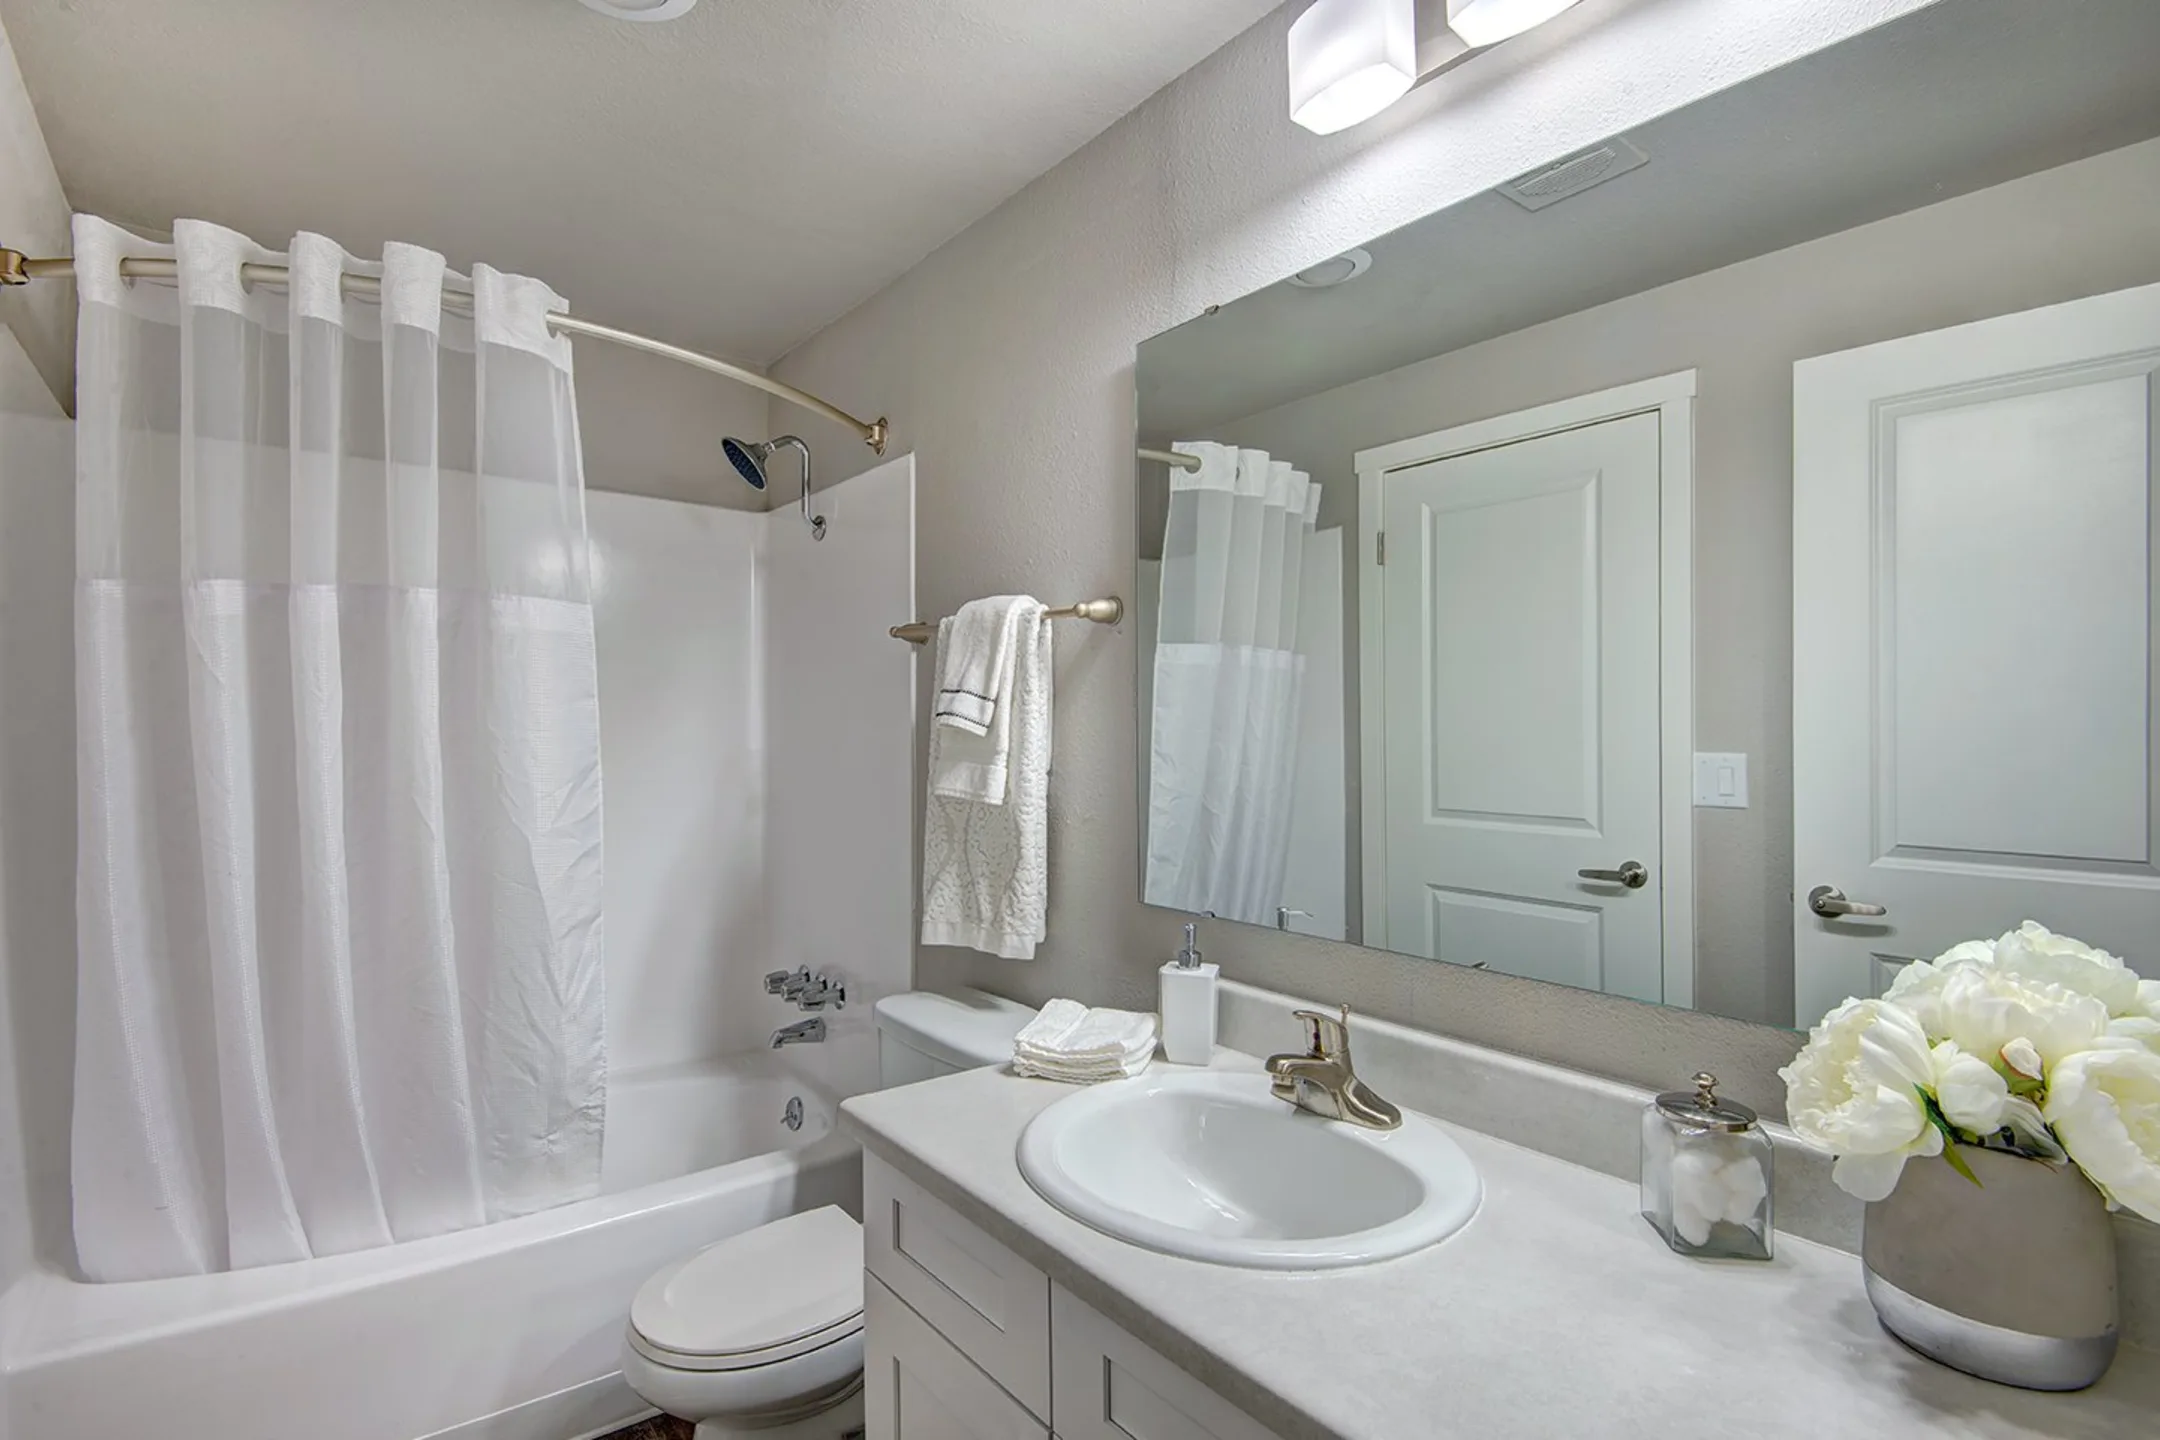 Bathroom - Timbre Apartments - Lakewood, WA